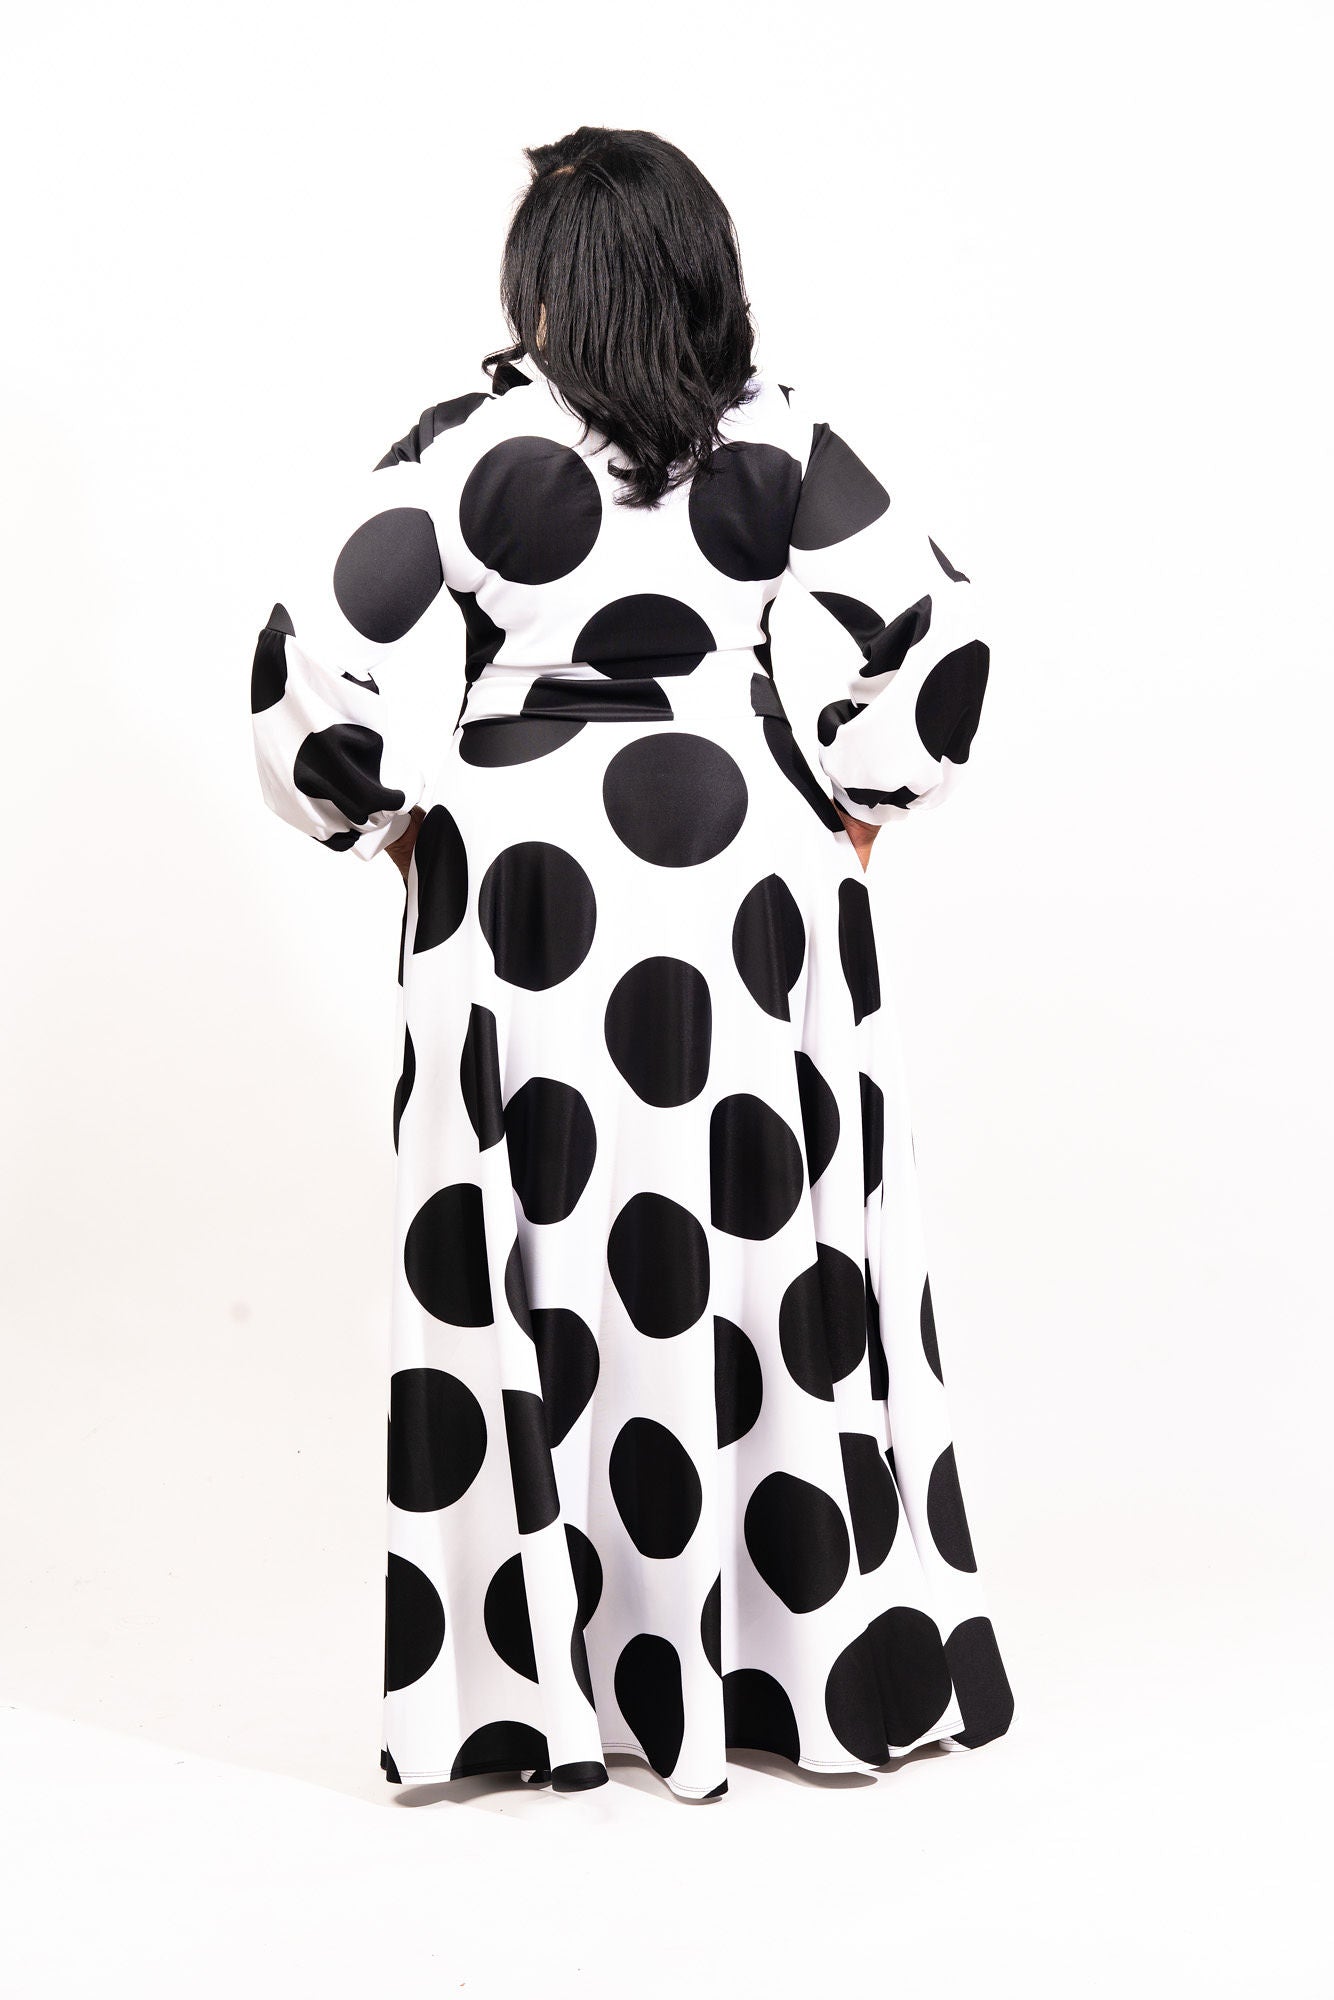 white and black polka dot maxi dress